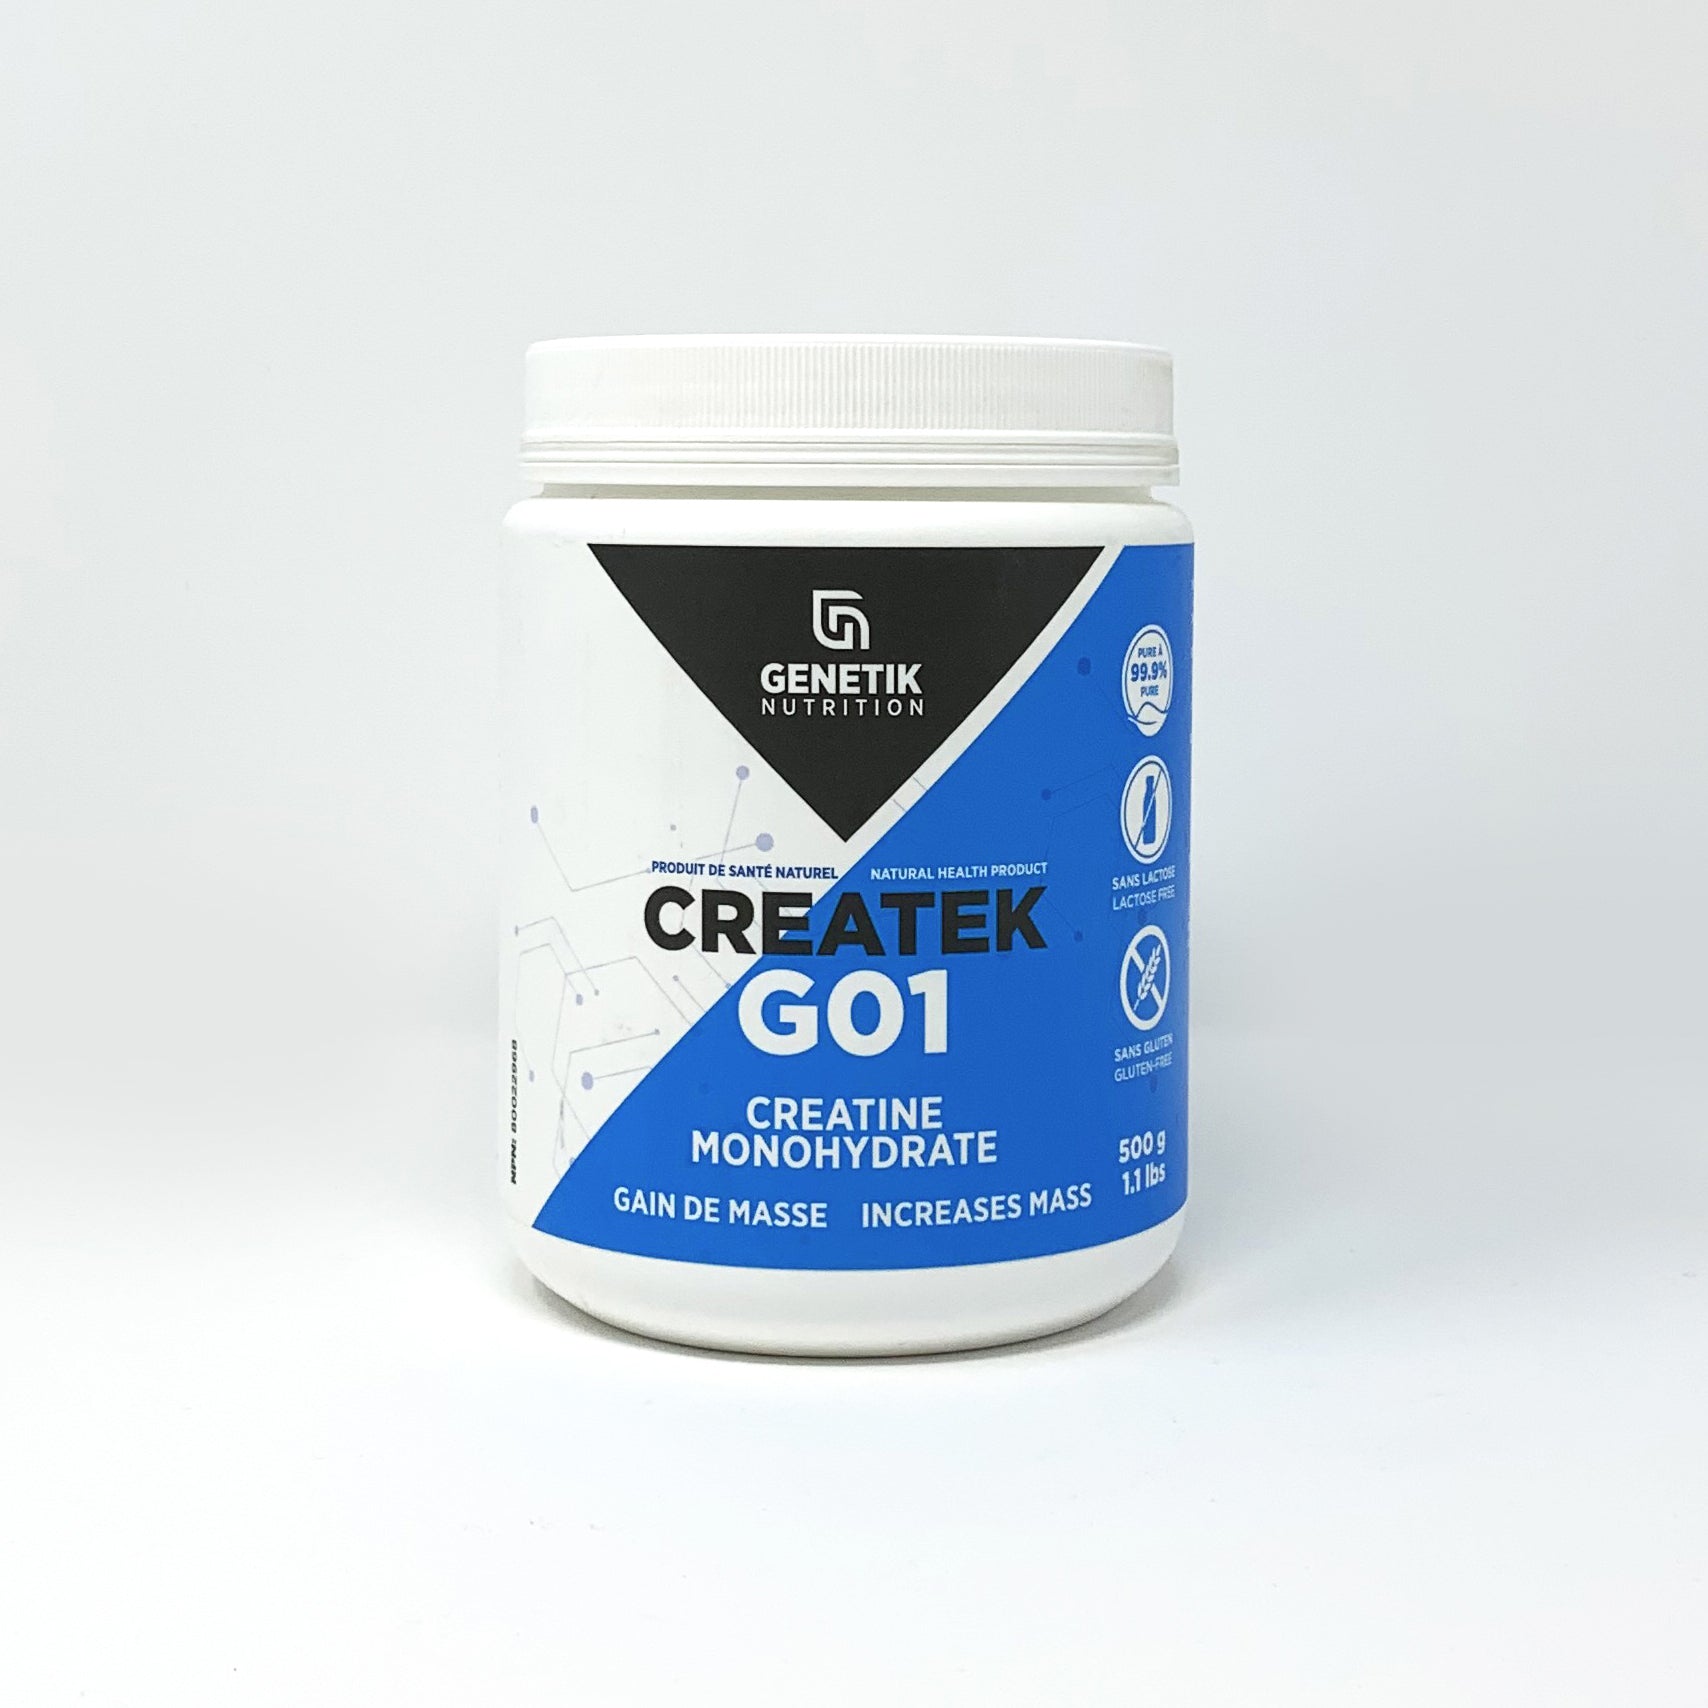 Créatine Monohydrate Createk G01 - 500 g/ 1.1 lbs - Genetik Nutrition